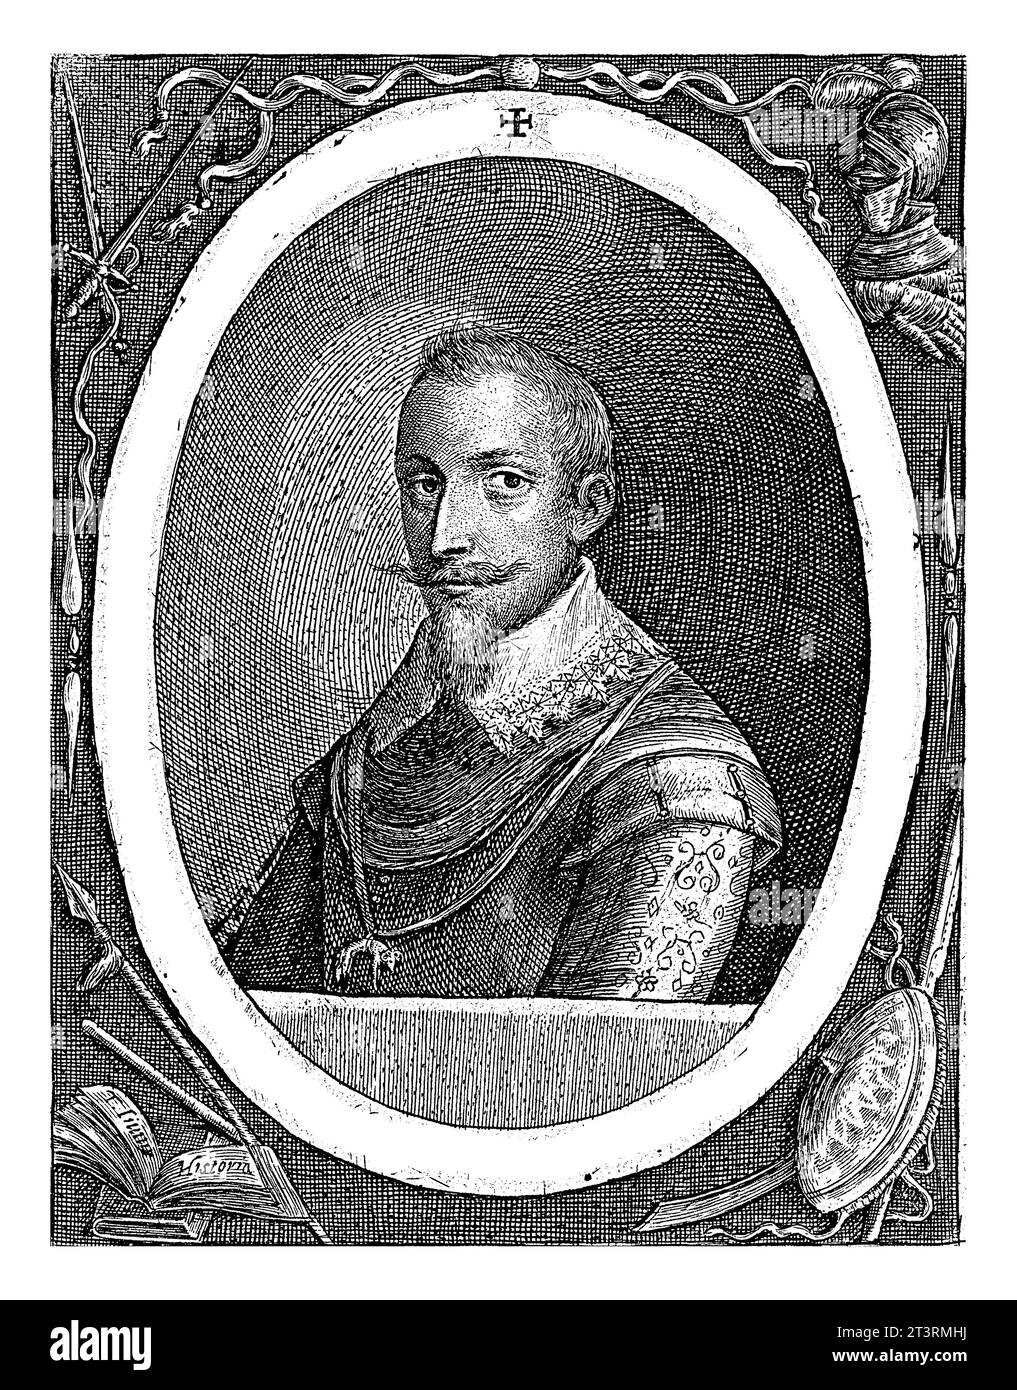 Portrait of Ambrogio Spinola, Crispijn van de Passe, 1574 - 1637 Marquis de los Balbases. He arrived in the Southern Netherlands in 1602 as commander- Stock Photo